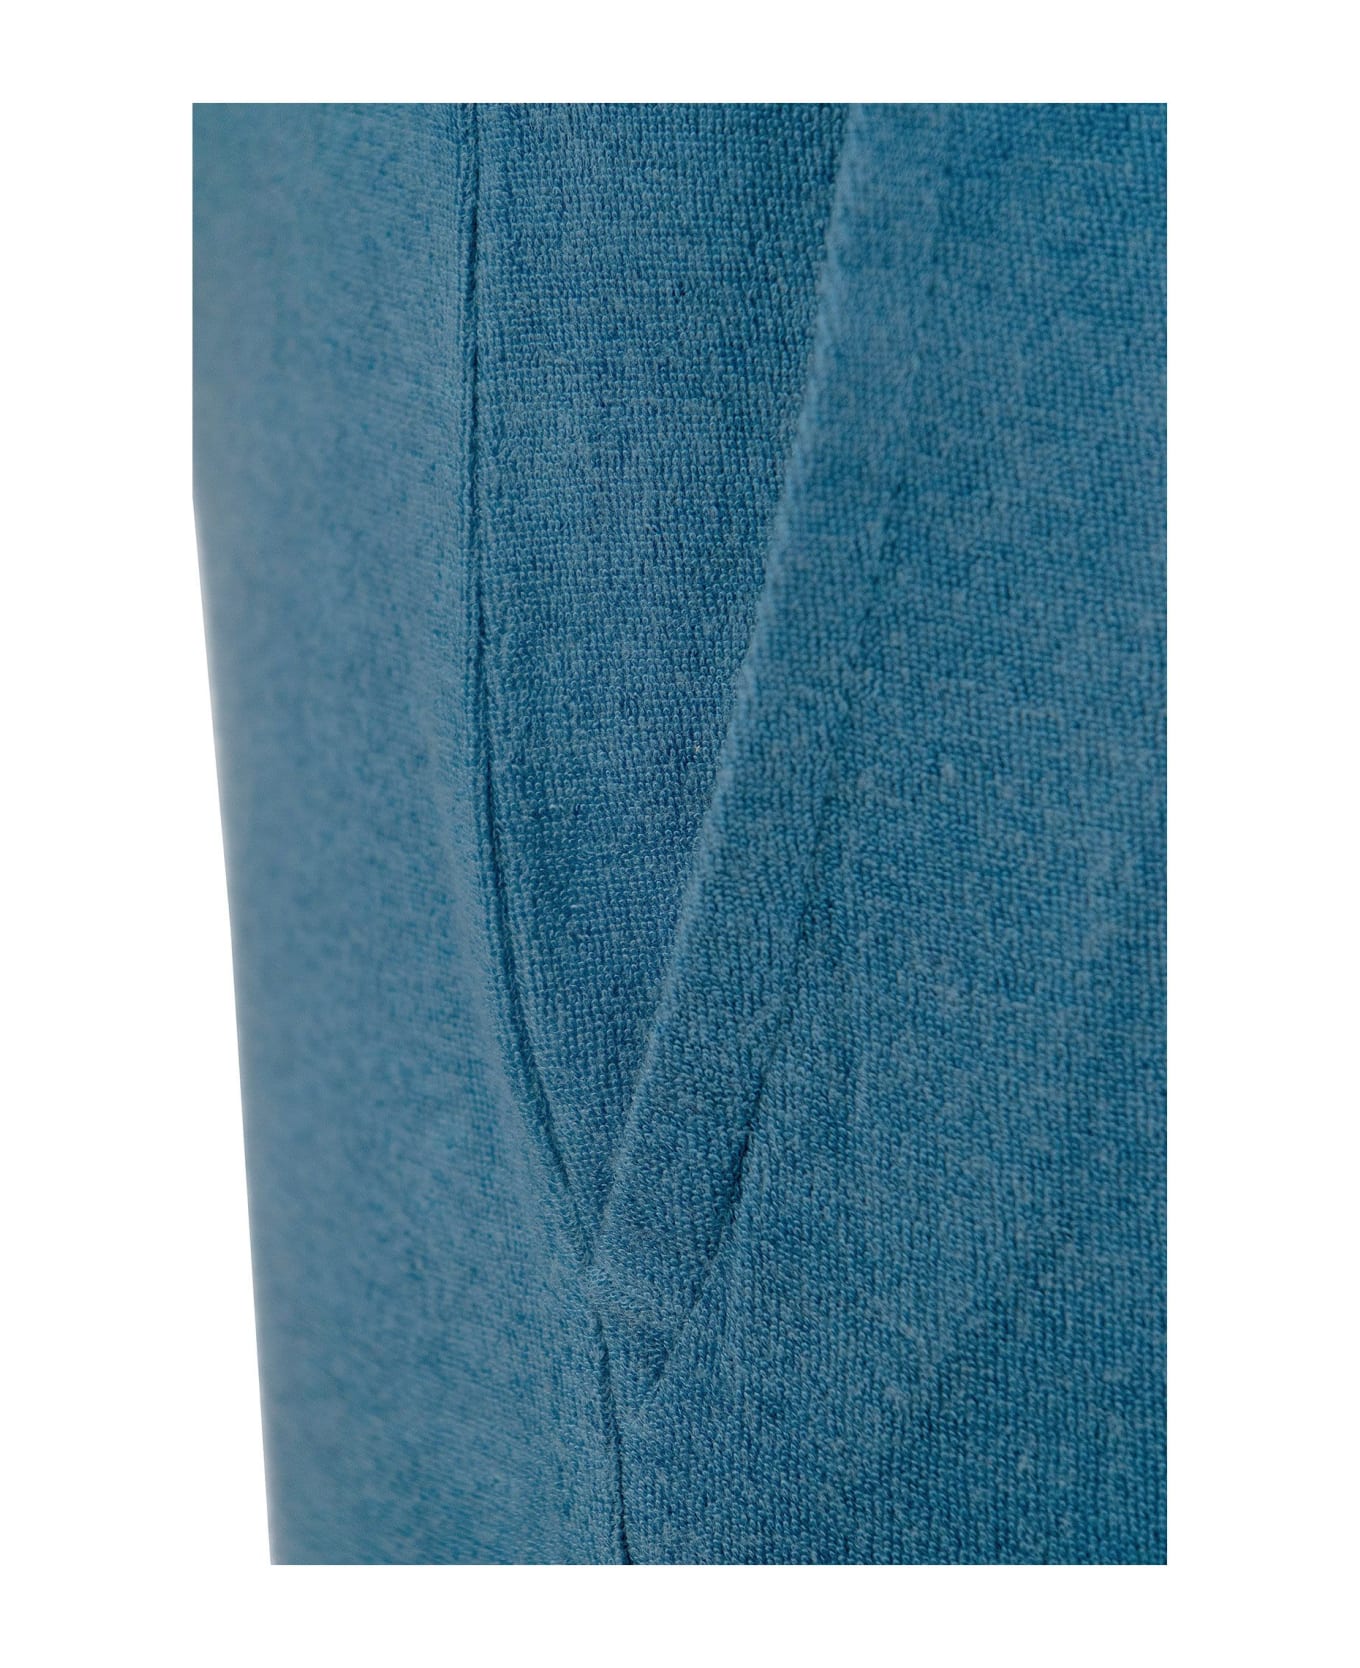 Majestic Filatures Cotton And Modal Bermuda Shorts - Blue ショートパンツ